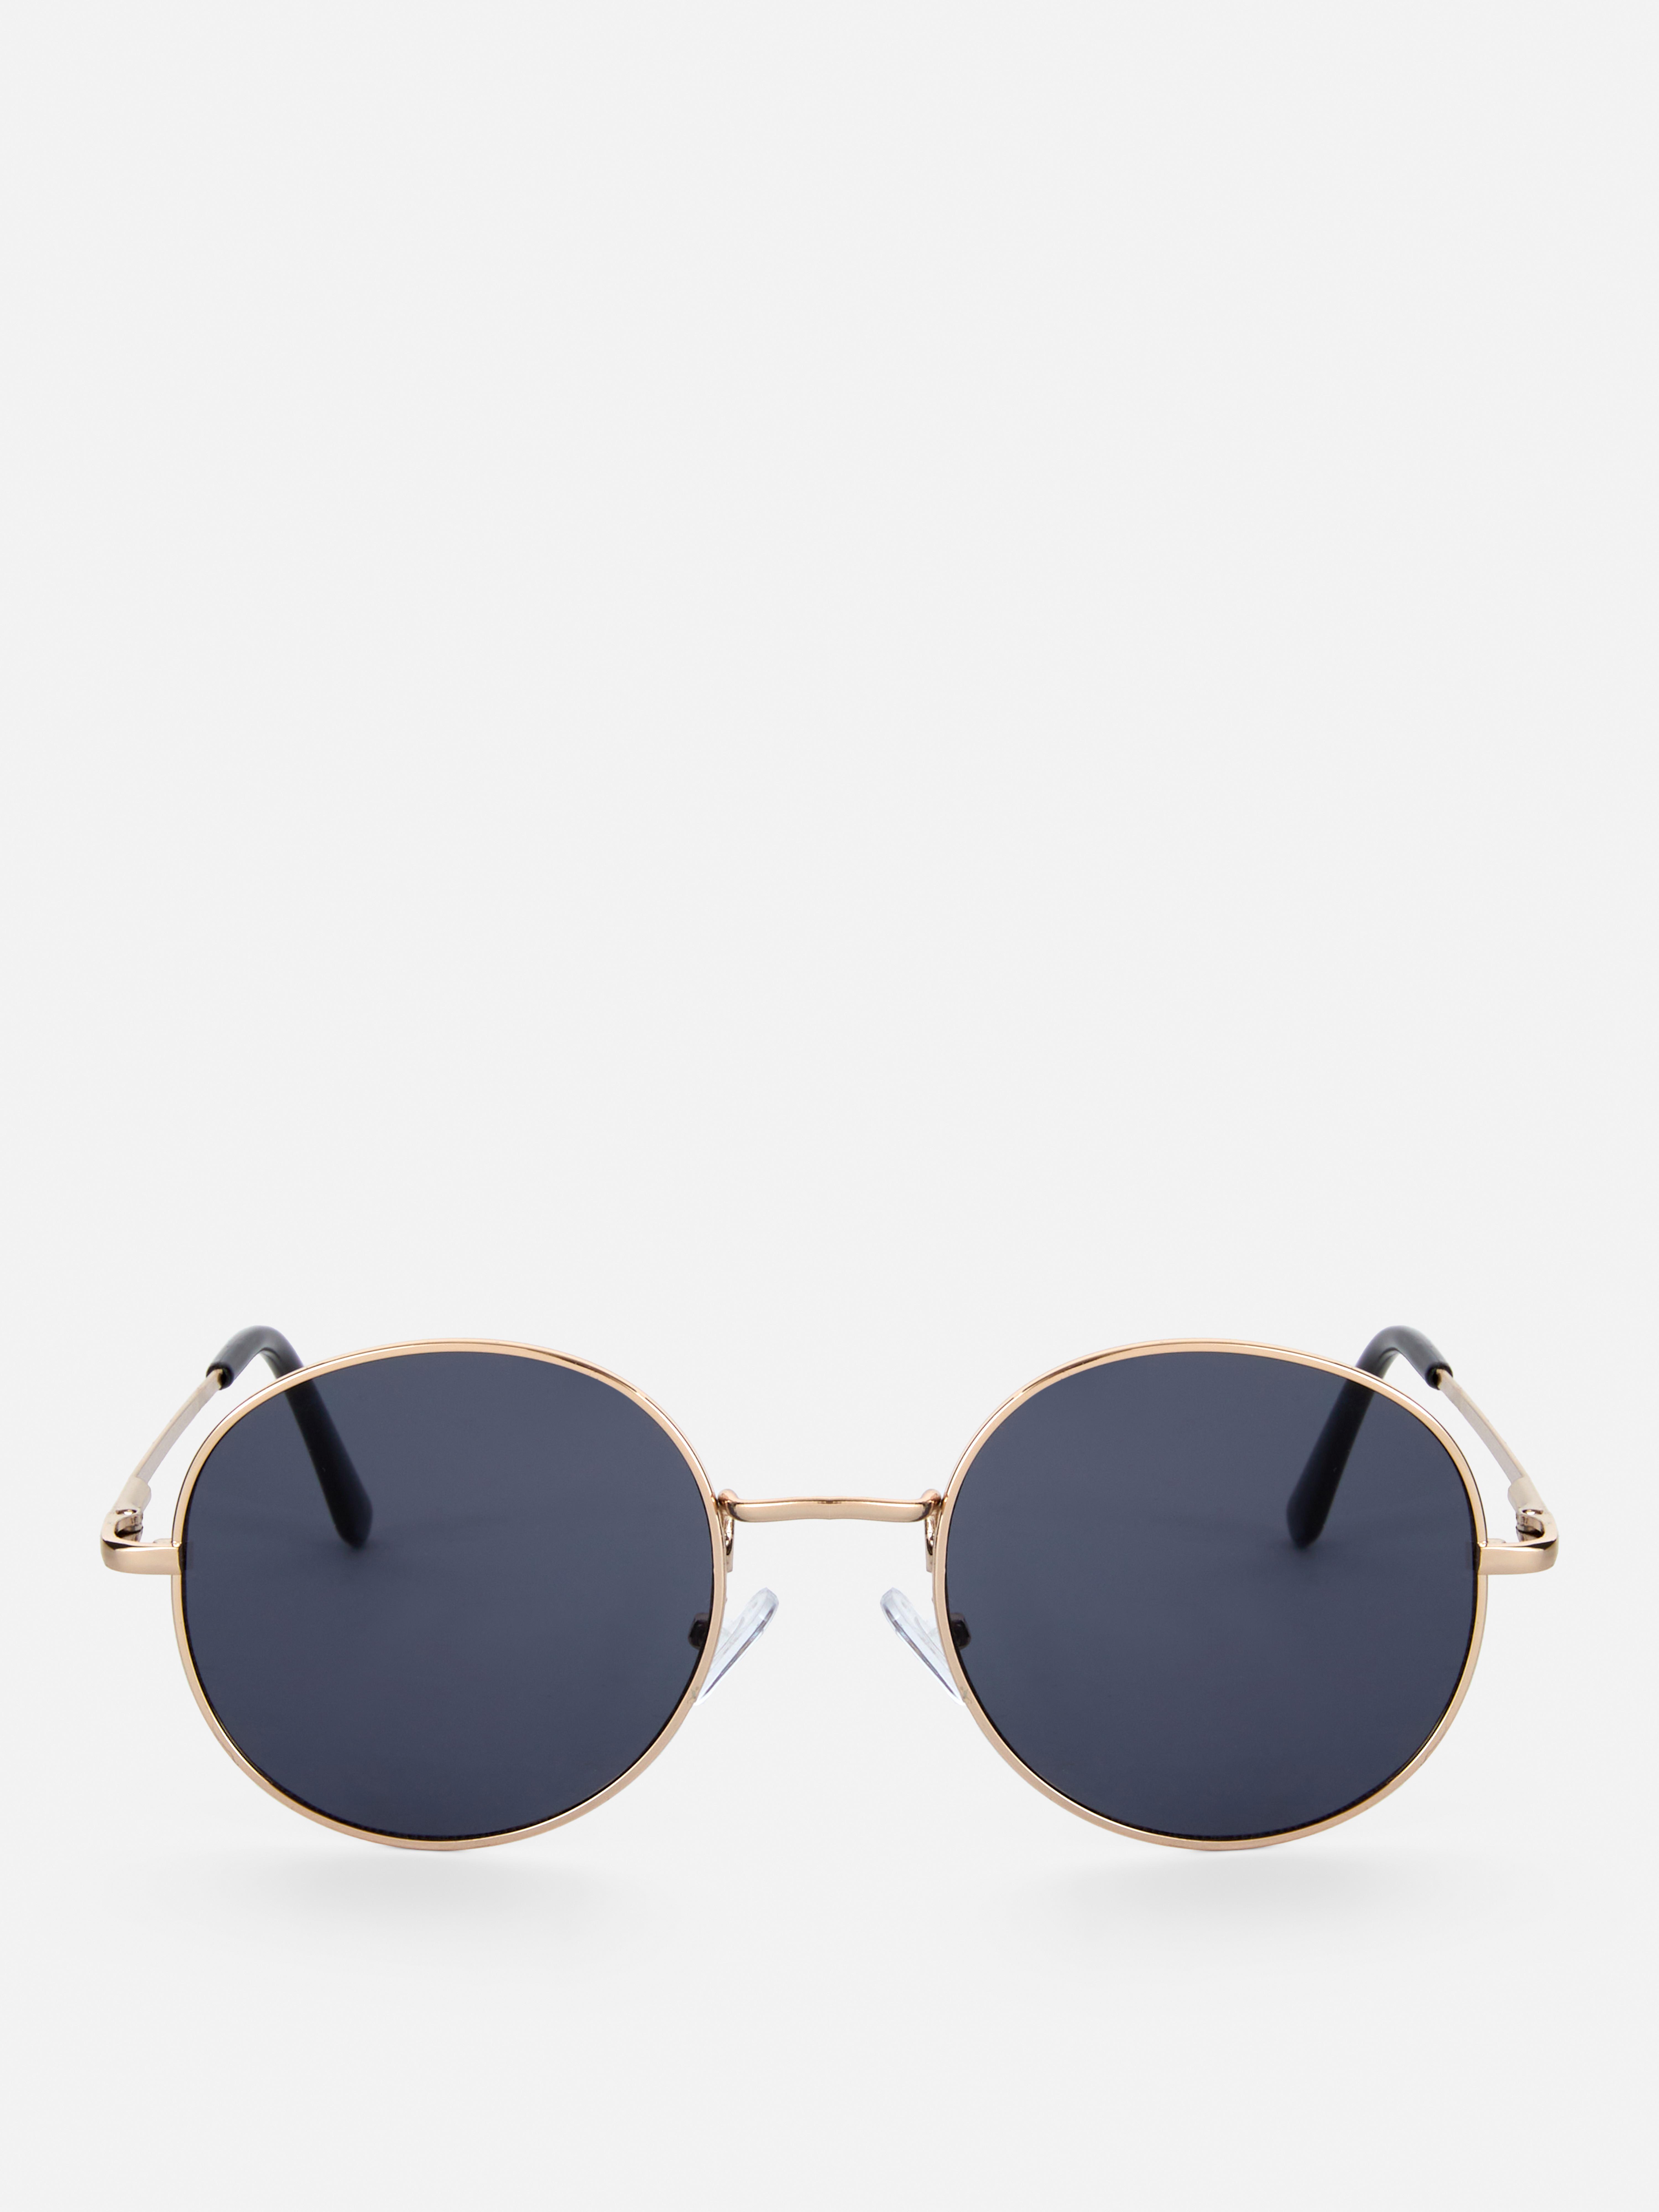 Metal Frame Round Vintage Sunglasses Gold